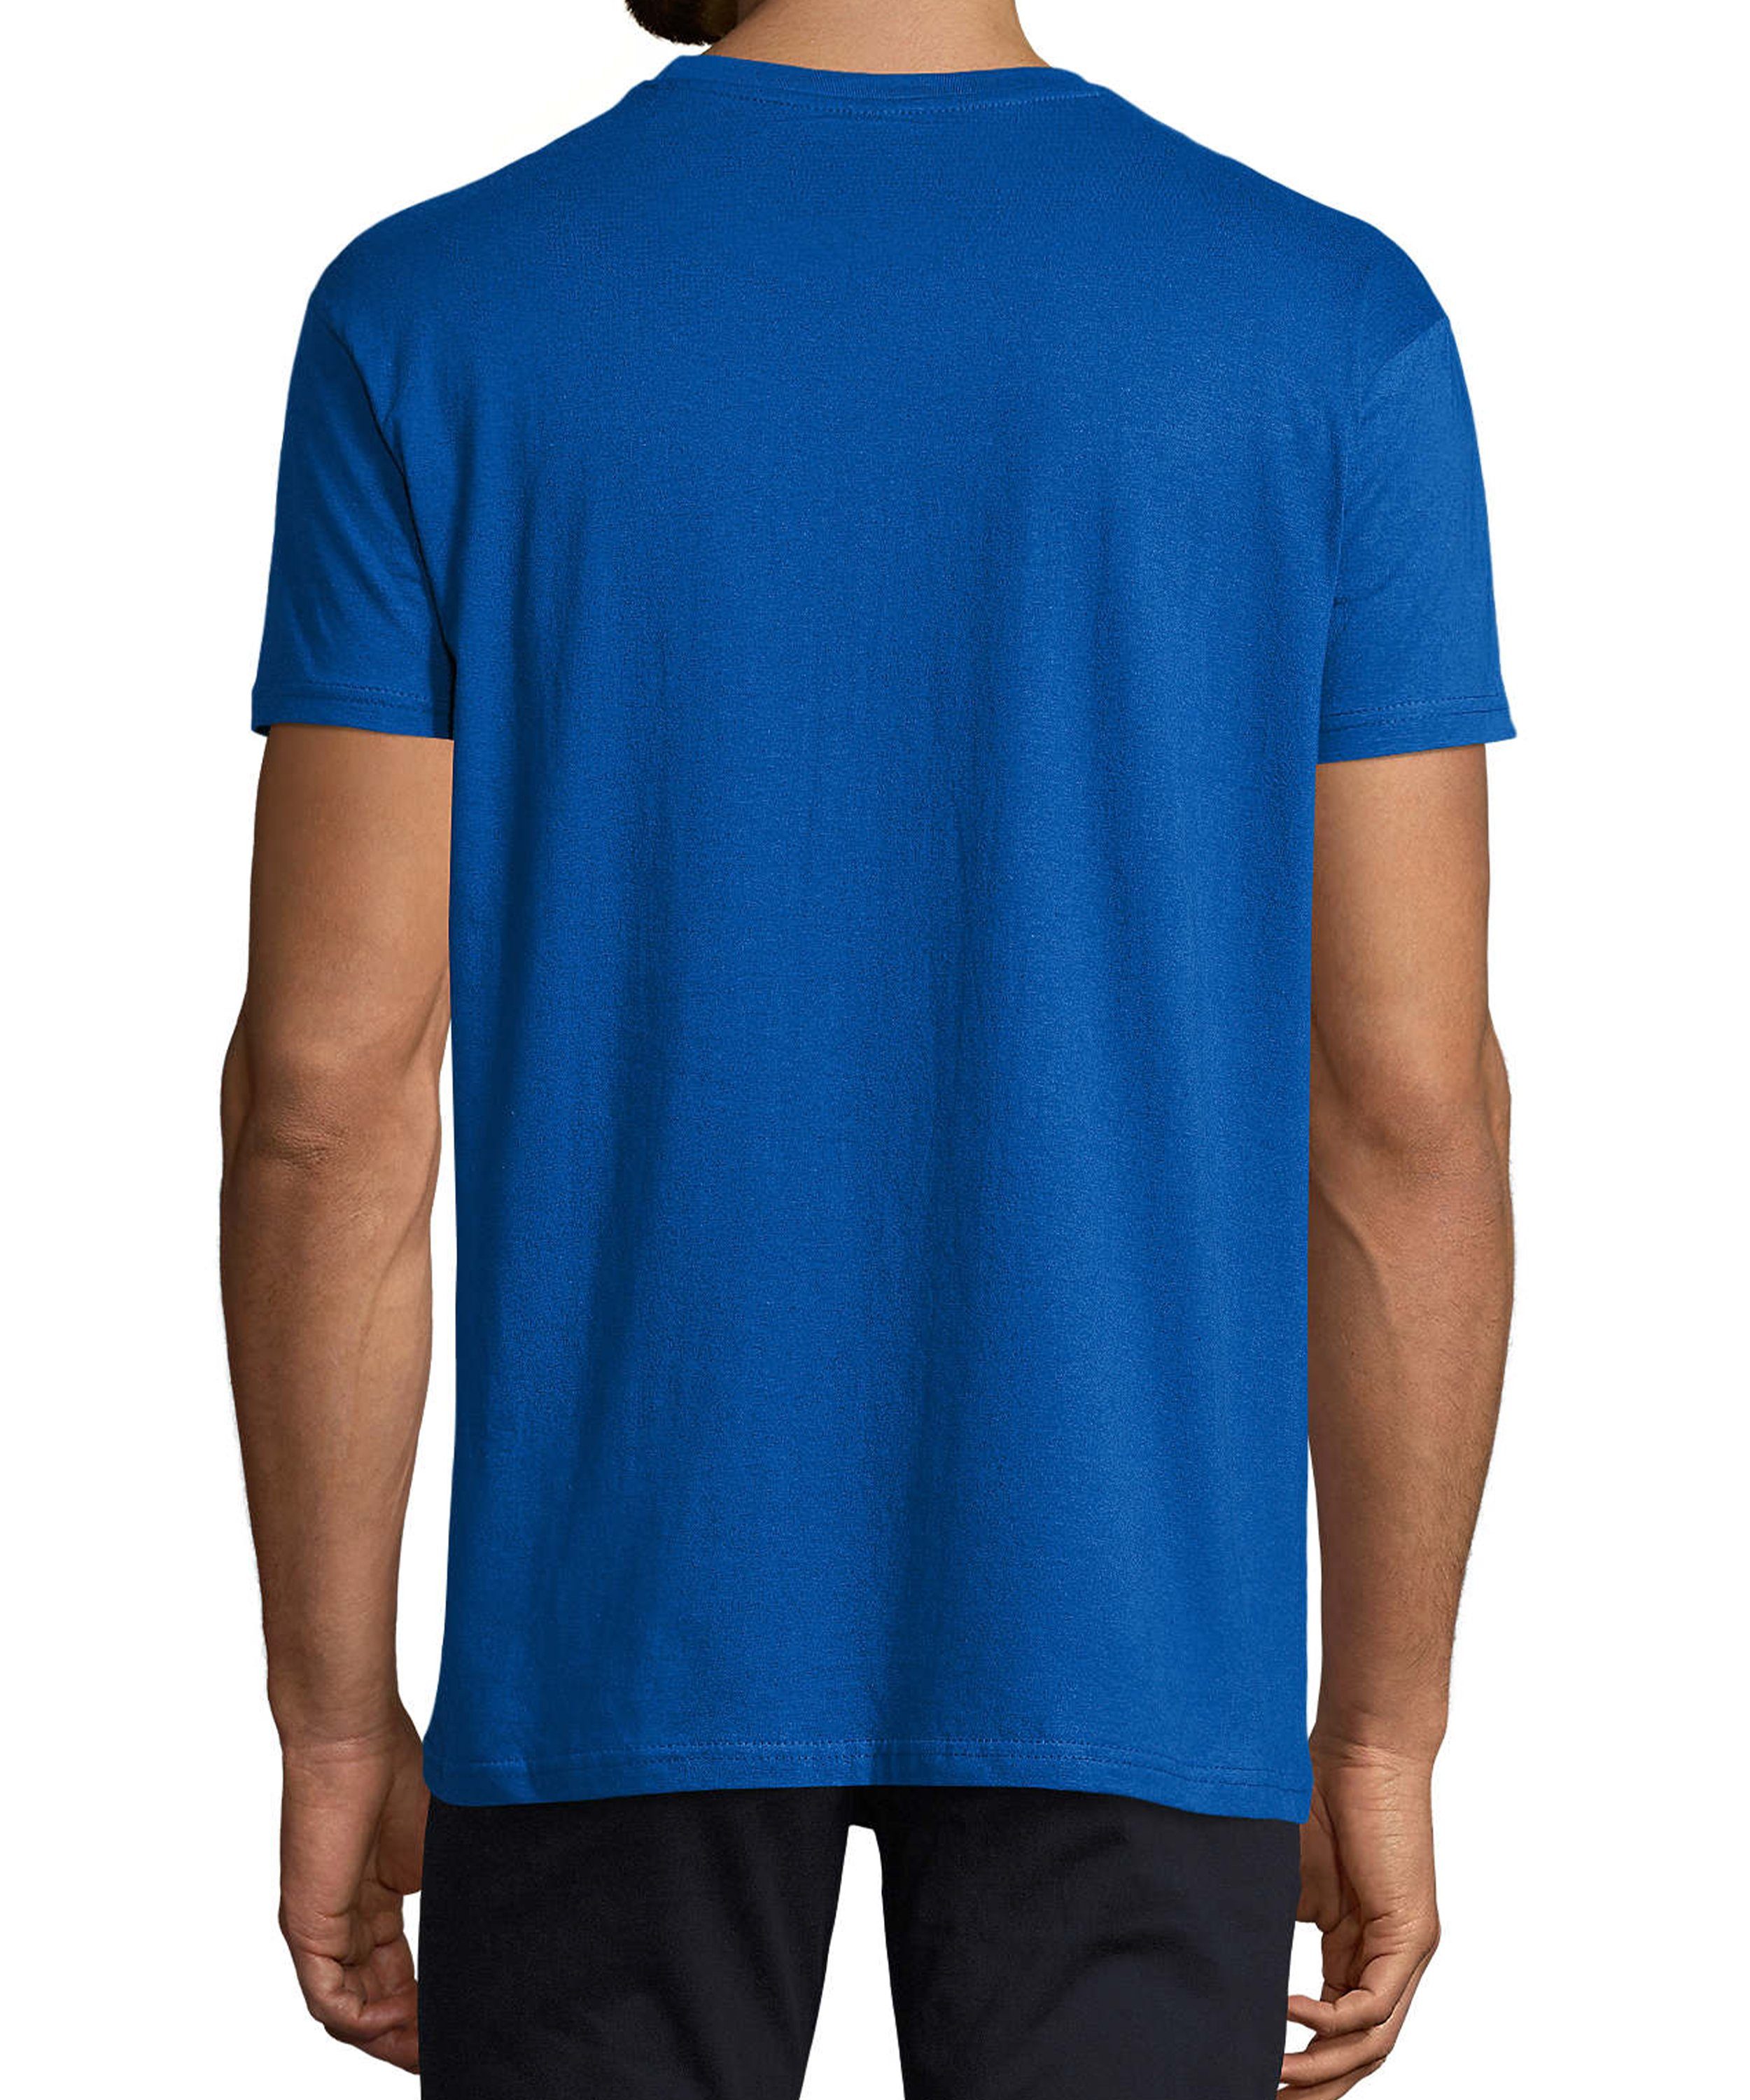 Trinkshirt MyDesign24 Herren Print Fun royal - Fit, mit T-Shirt T-Shirt blau Shirt i318 Oktoberfest Aufdruck Baumwollshirt Regular